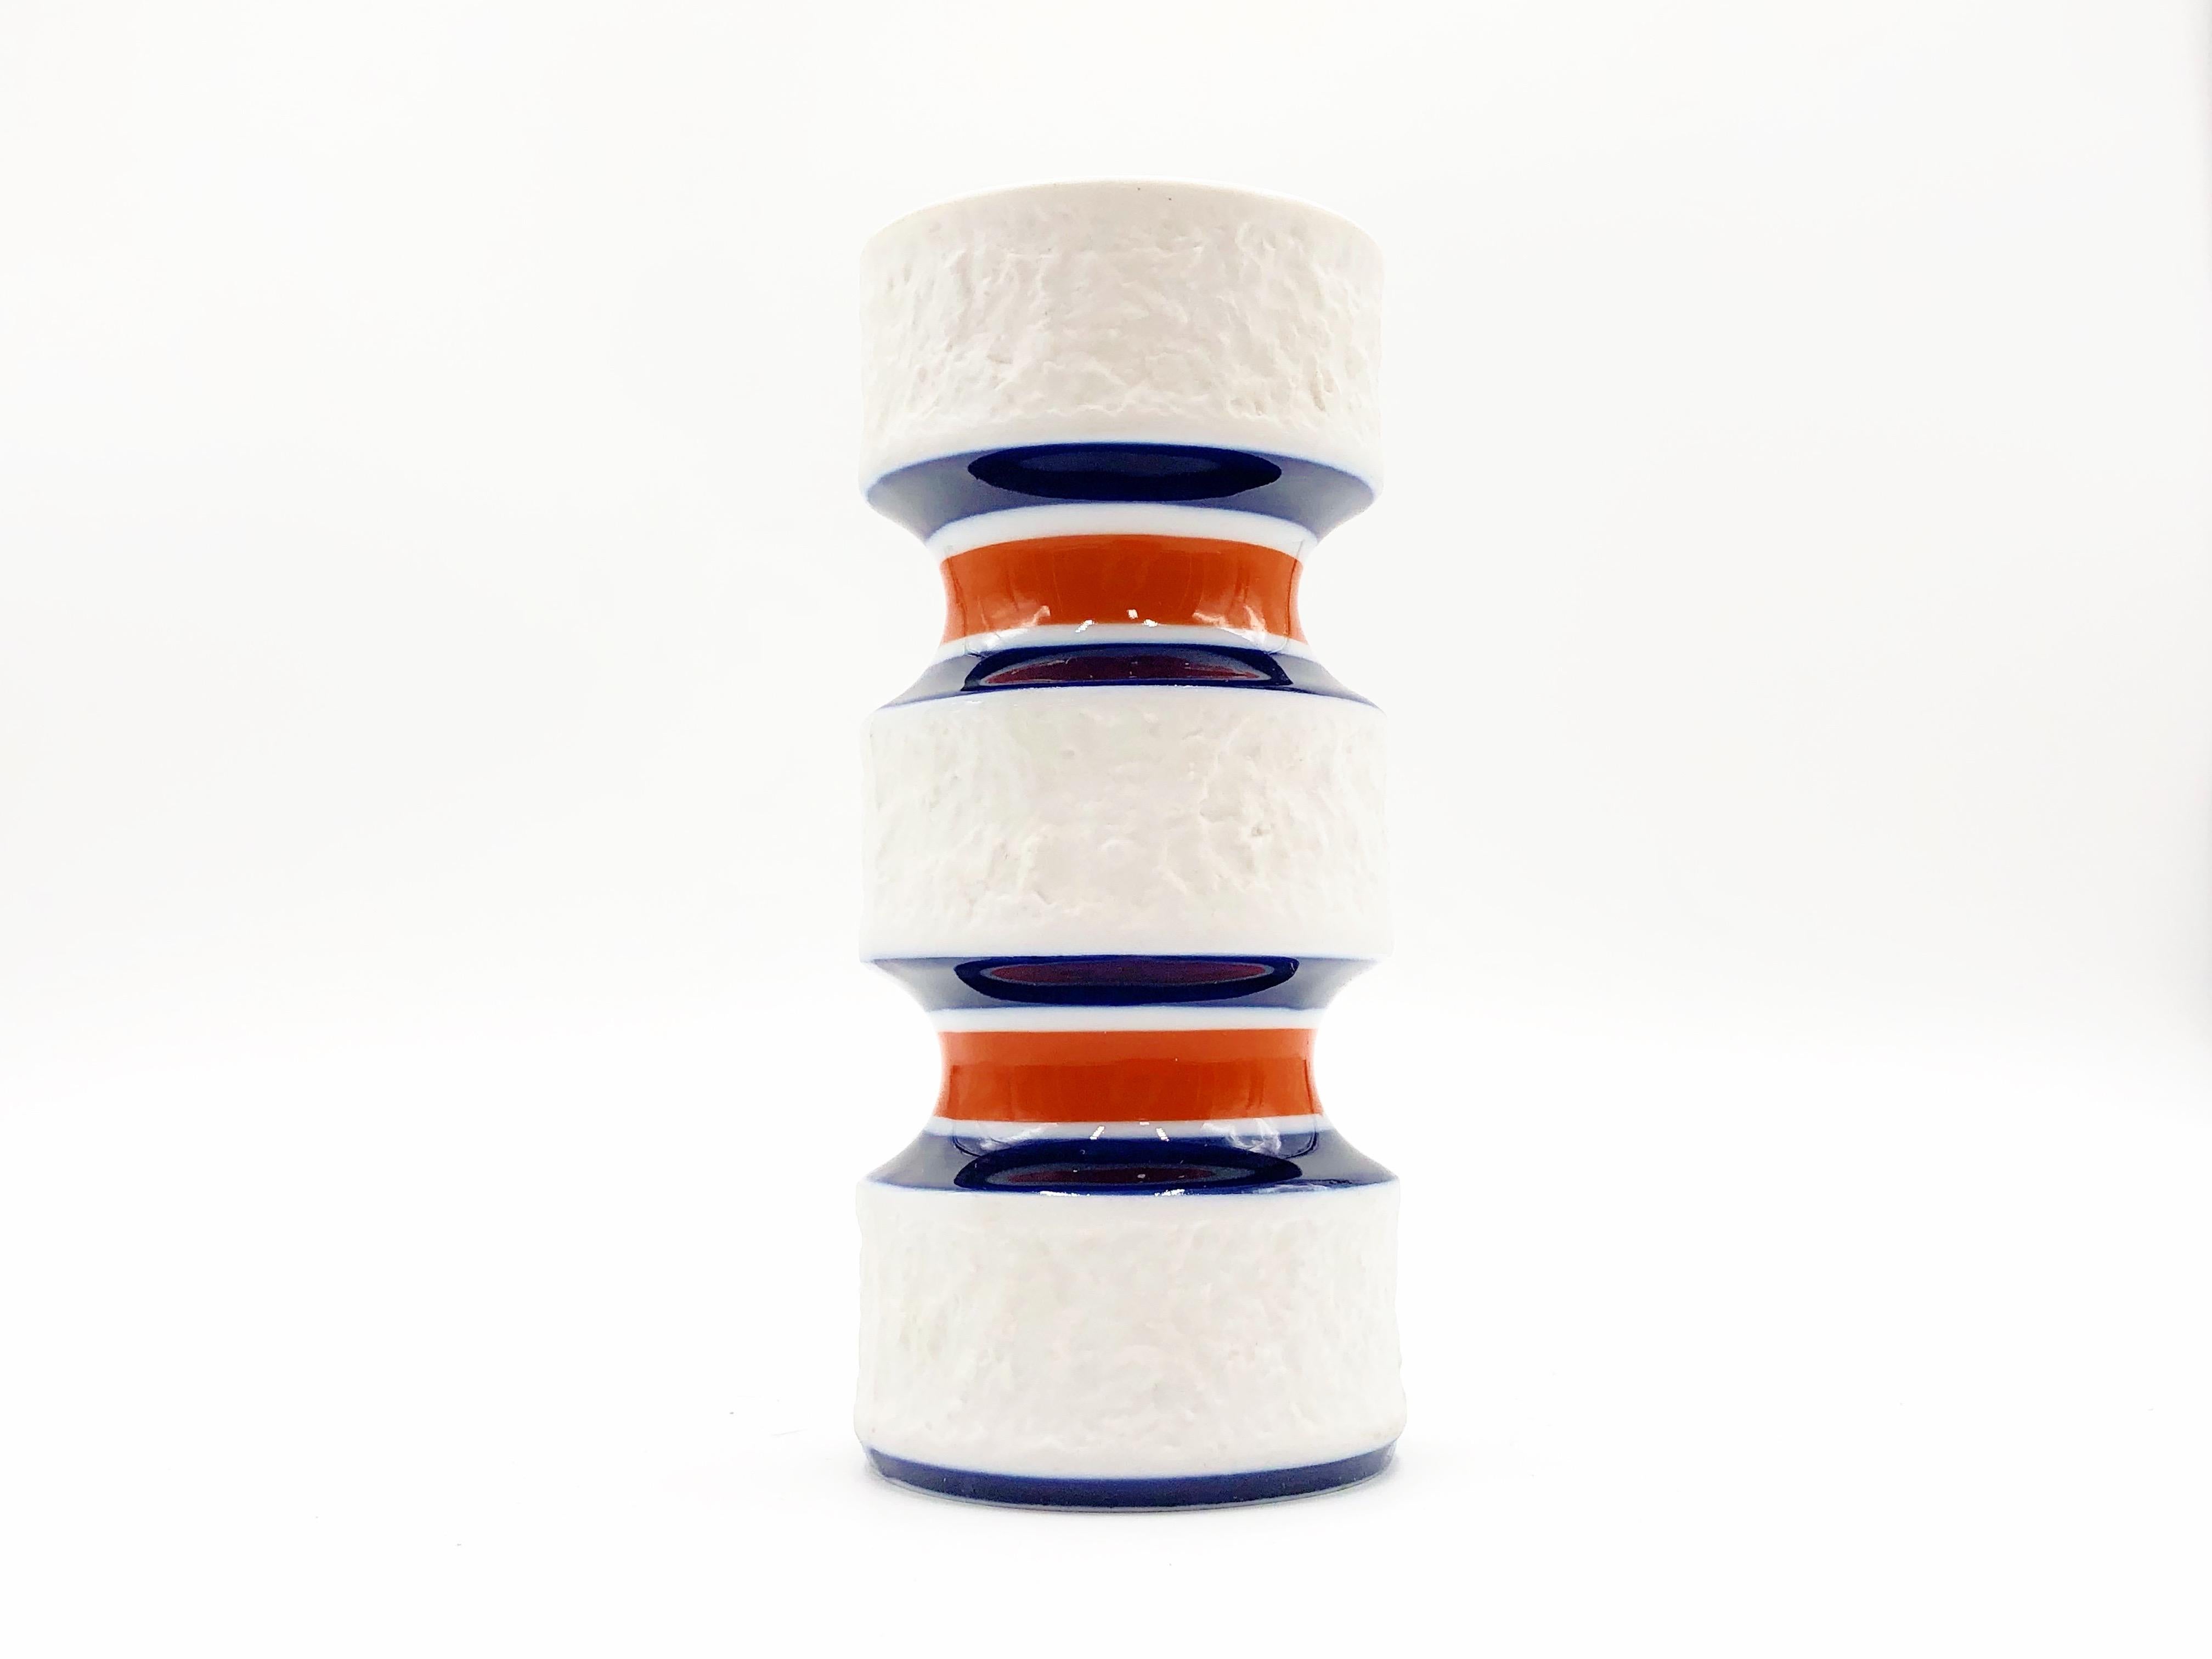 Mid-Century Modern porcelain vase by KPM Royal Porcelain Factory in Germany, circa 1960s.

White matte bisque unglazed textured porcelain vase with orange and navy glazed accent. Interior is glazed. Marked KPM on base.

Details:
- 6.1